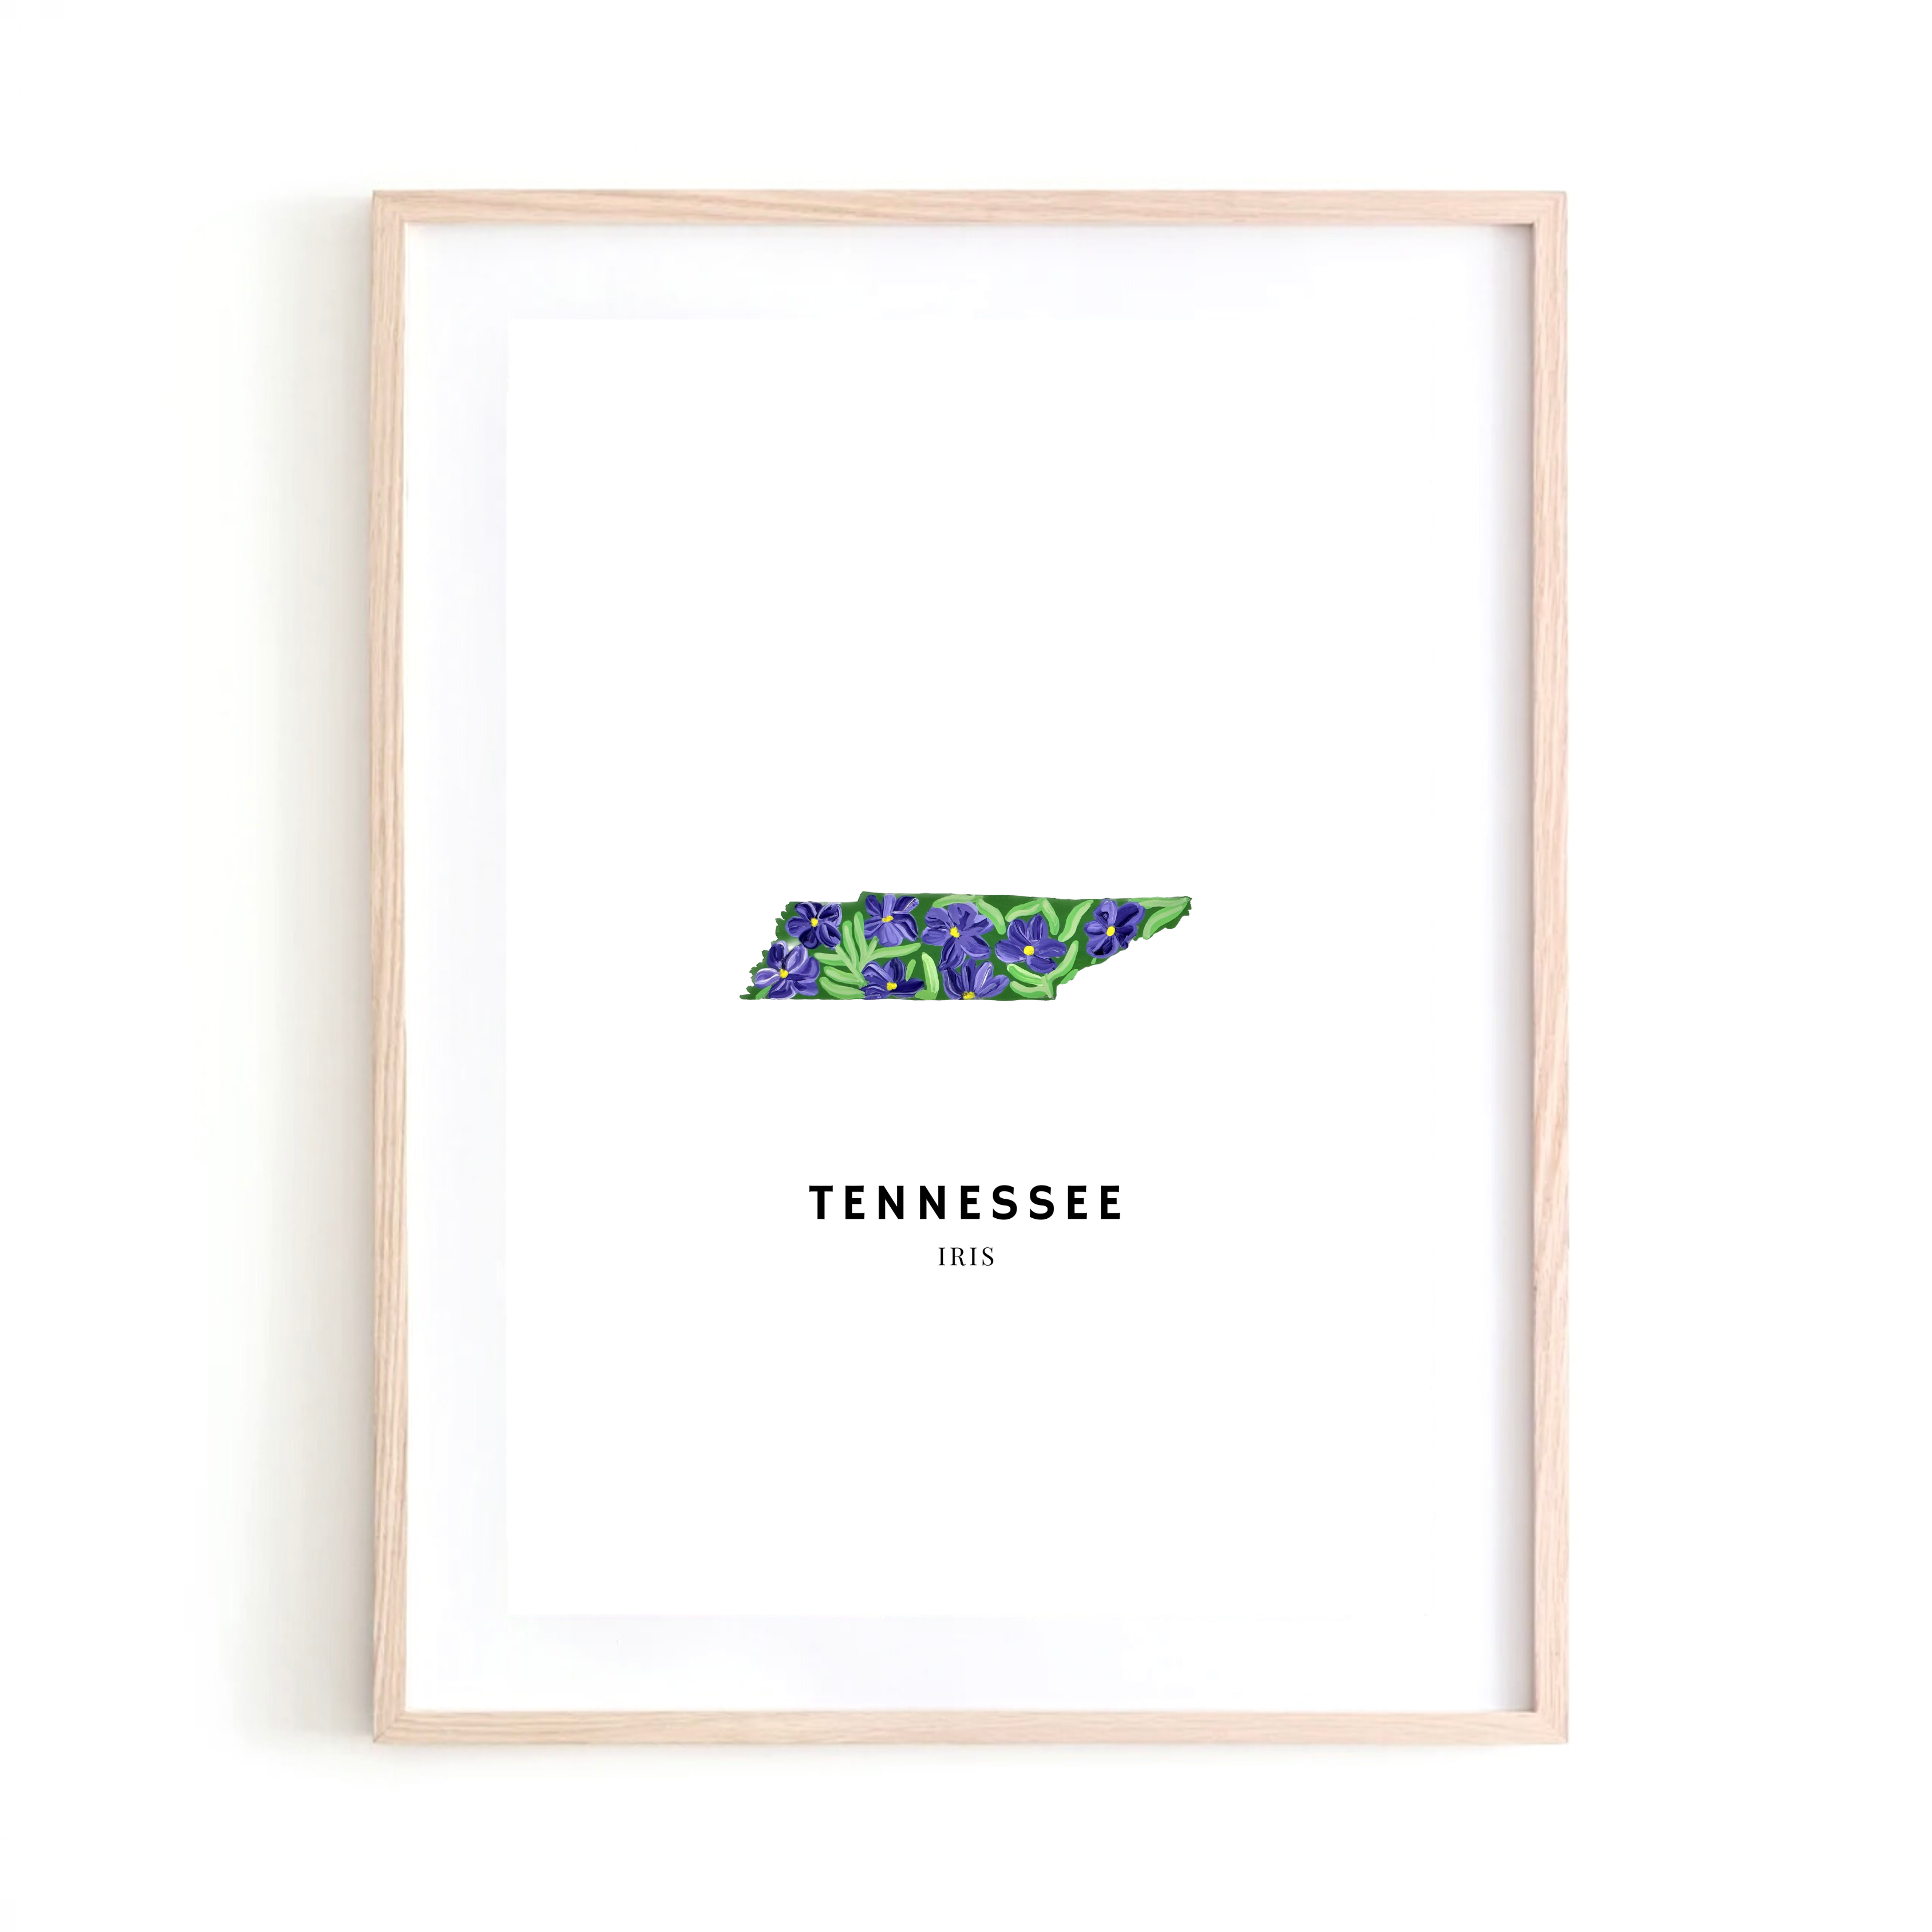 Tennessee State Flower art print